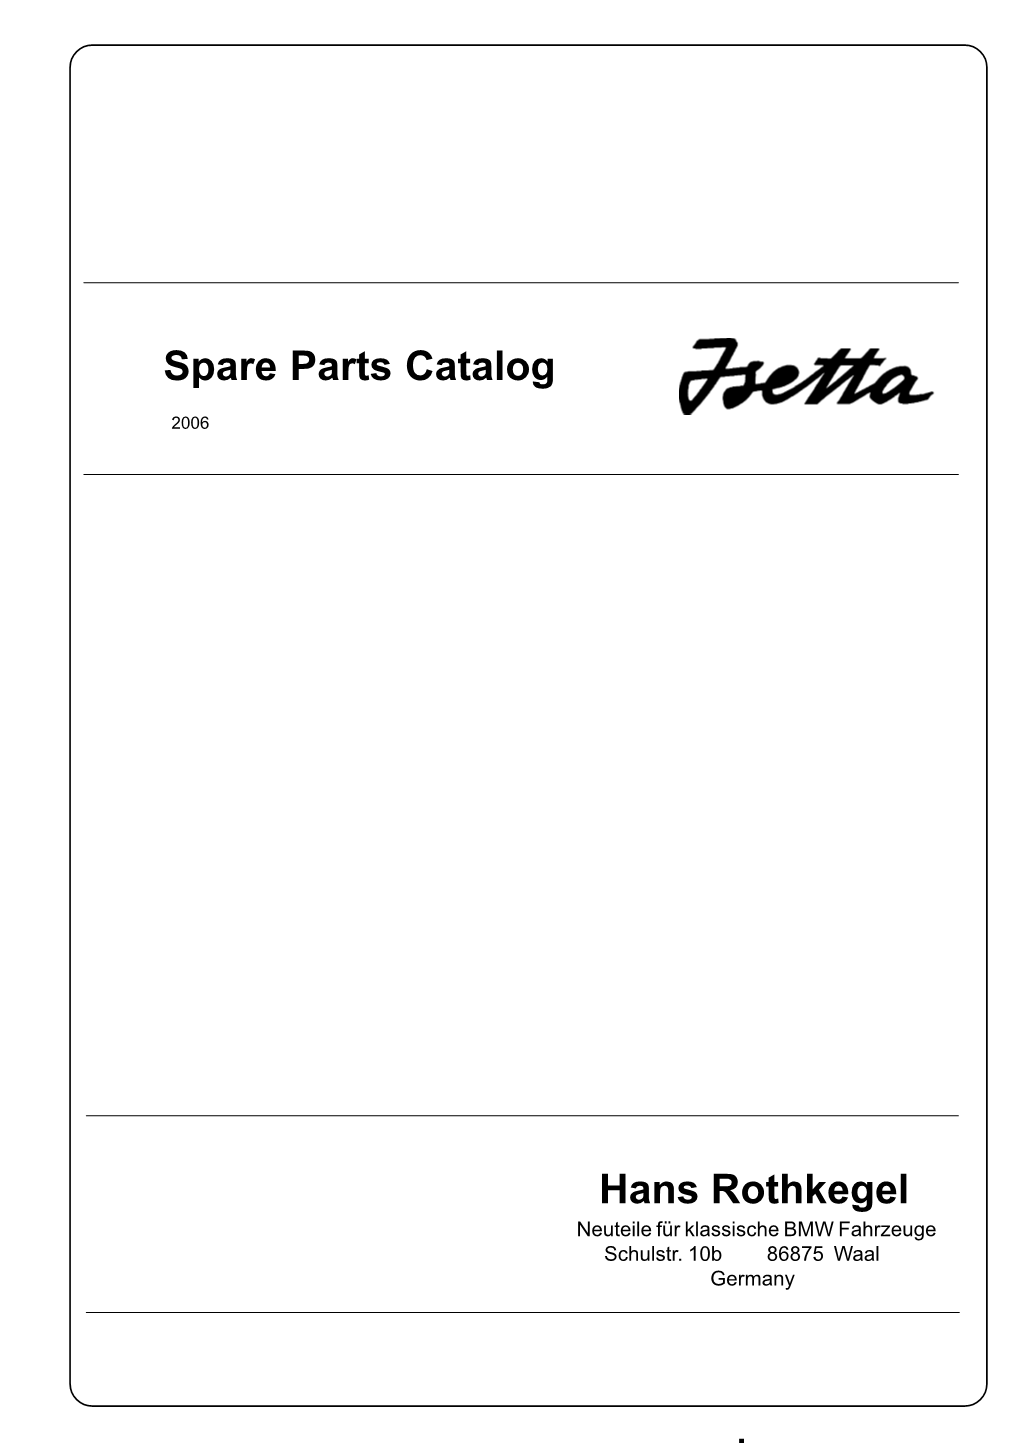 Spare Parts Catalog Hans Rothkegel